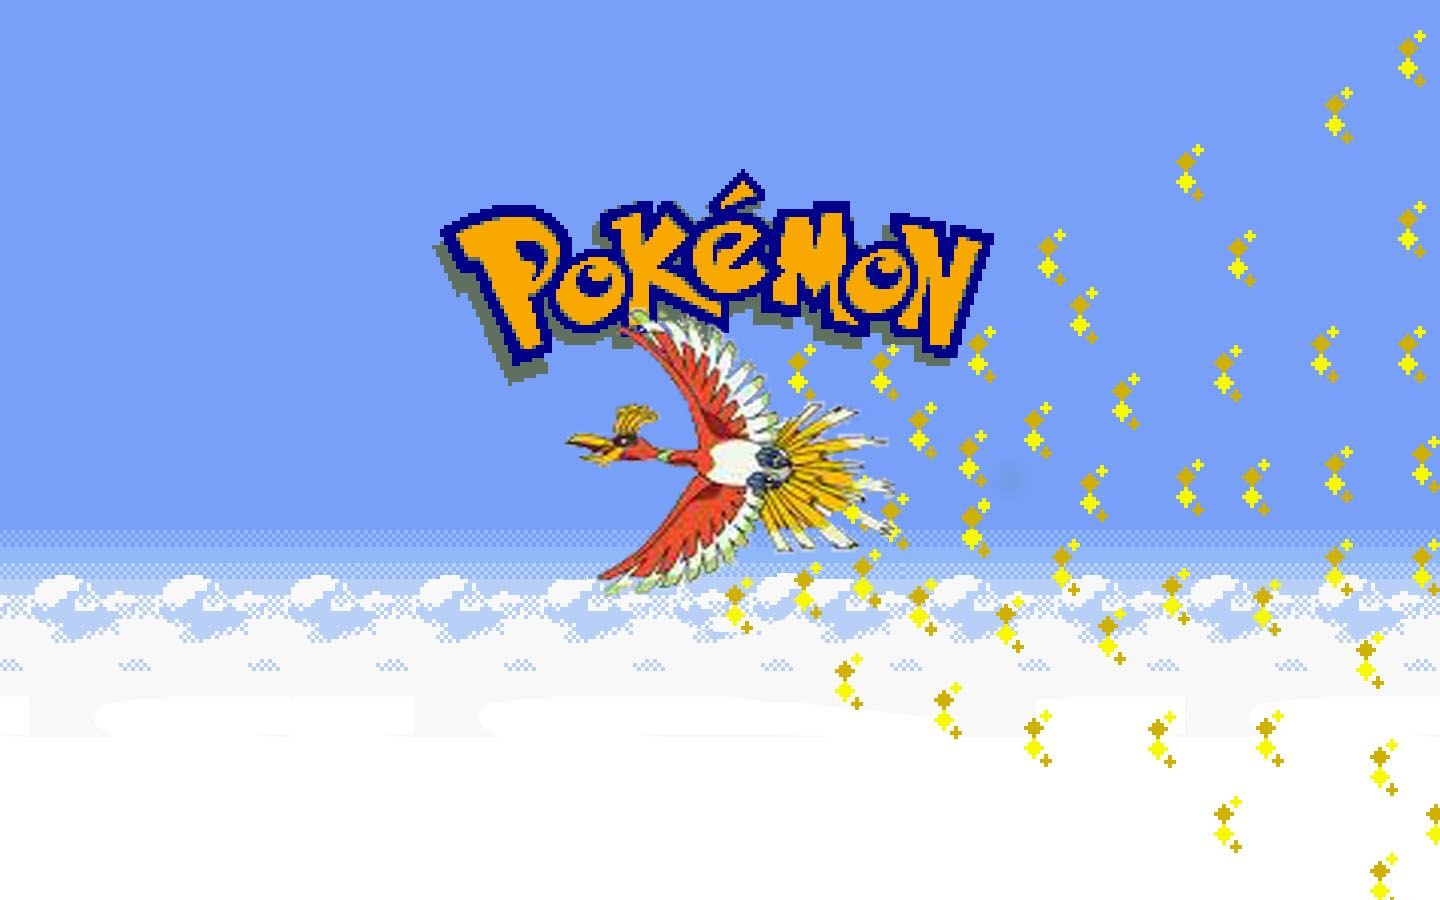 Mobile wallpaper: Pokémon, Video Game, Celebi (Pokémon), Pokémon: Gold And  Silver, 475171 download the picture for free.